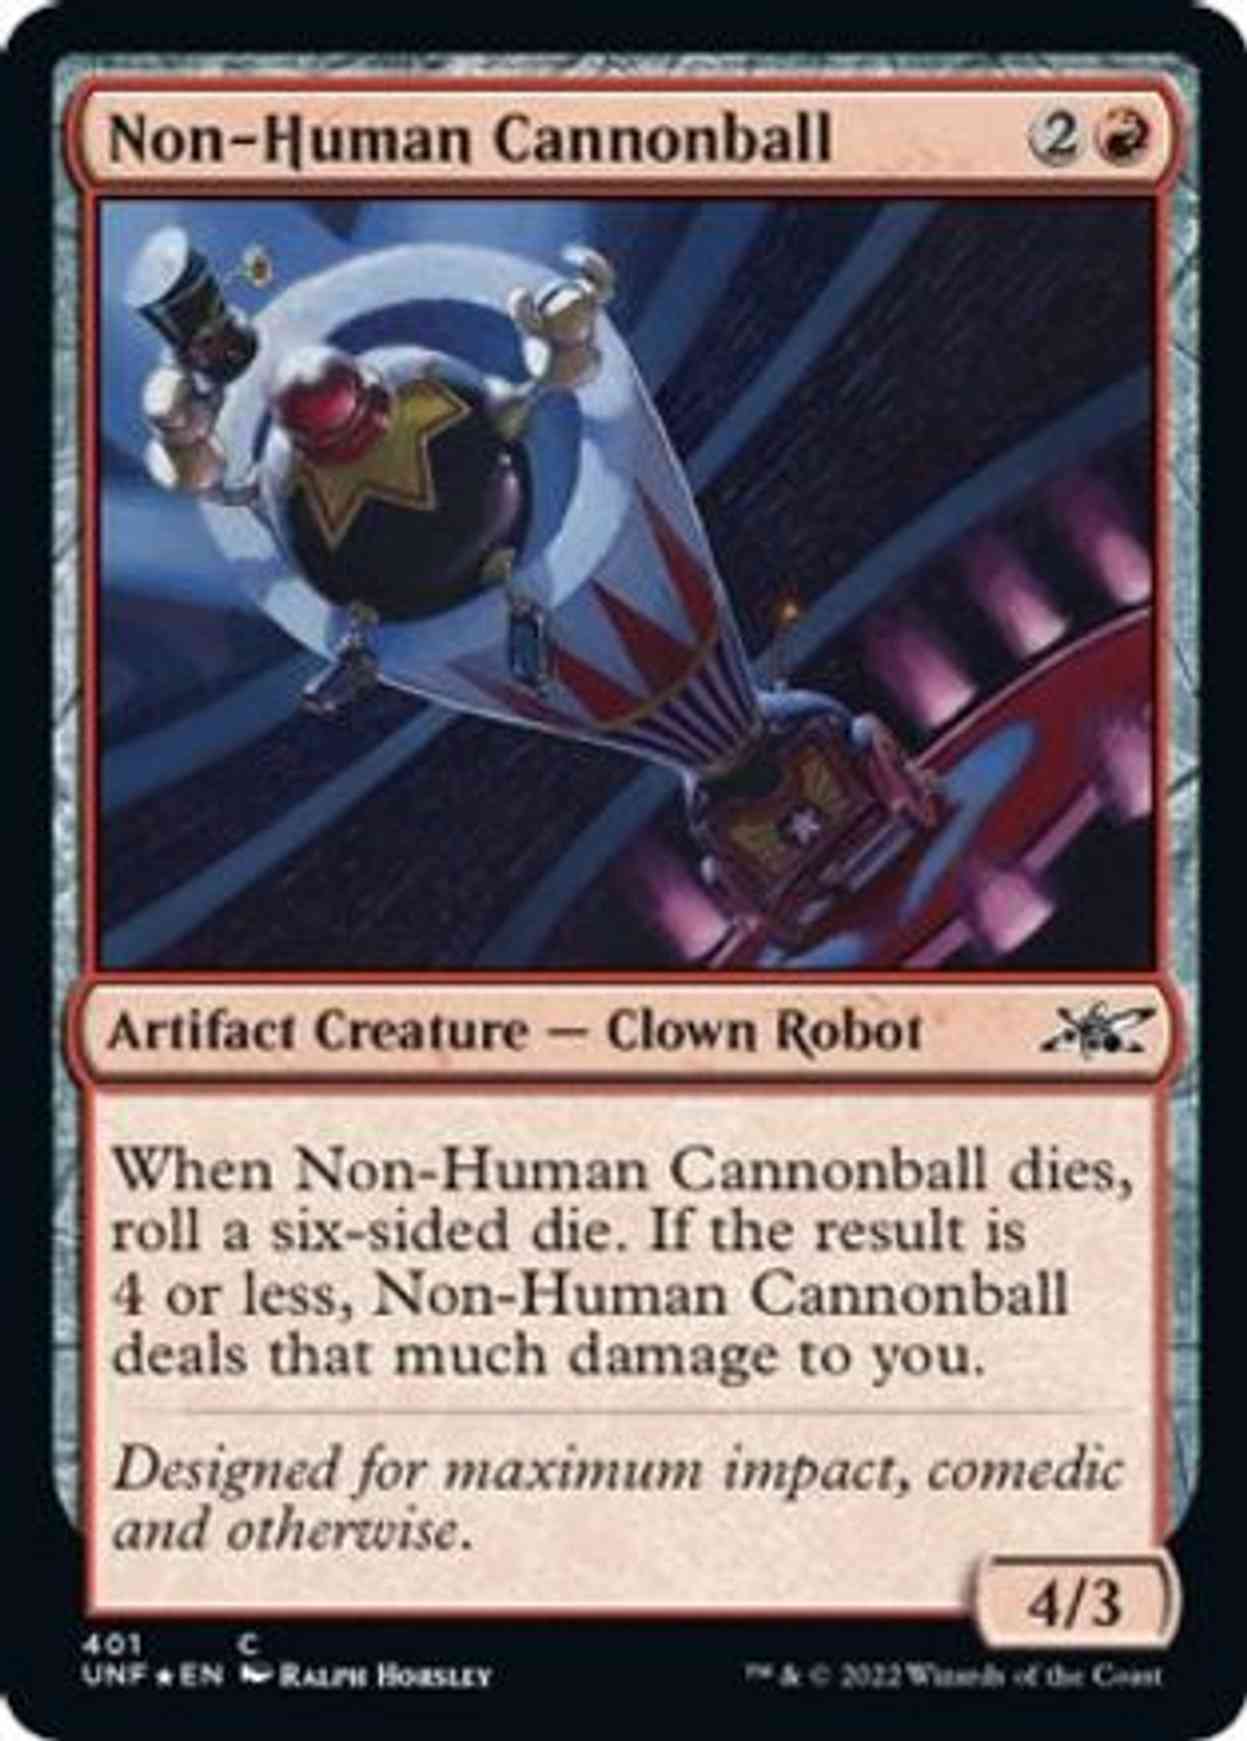 Non-Human Cannonball (Galaxy Foil) magic card front